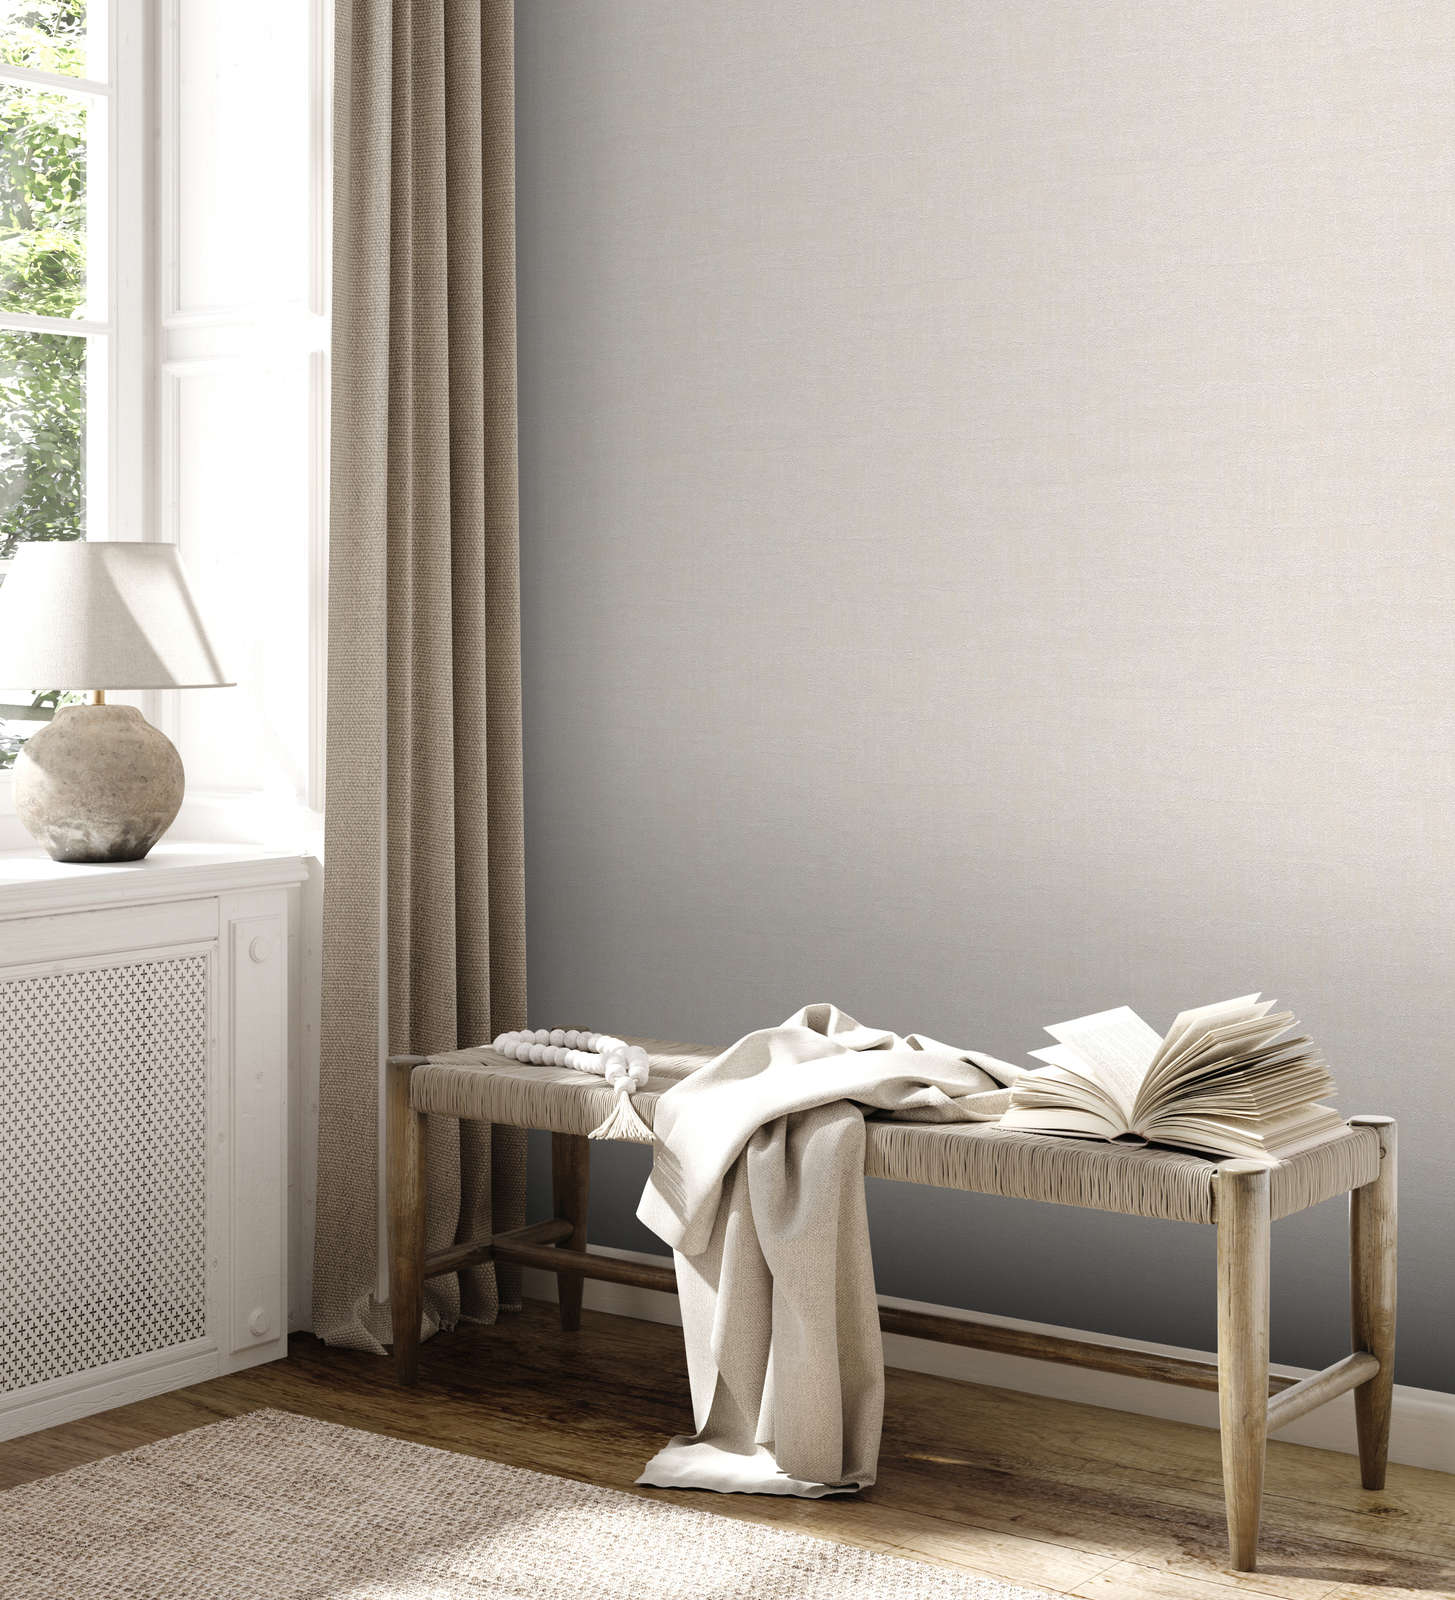             Softly coloured raffia wallpaper - cream, beige
        